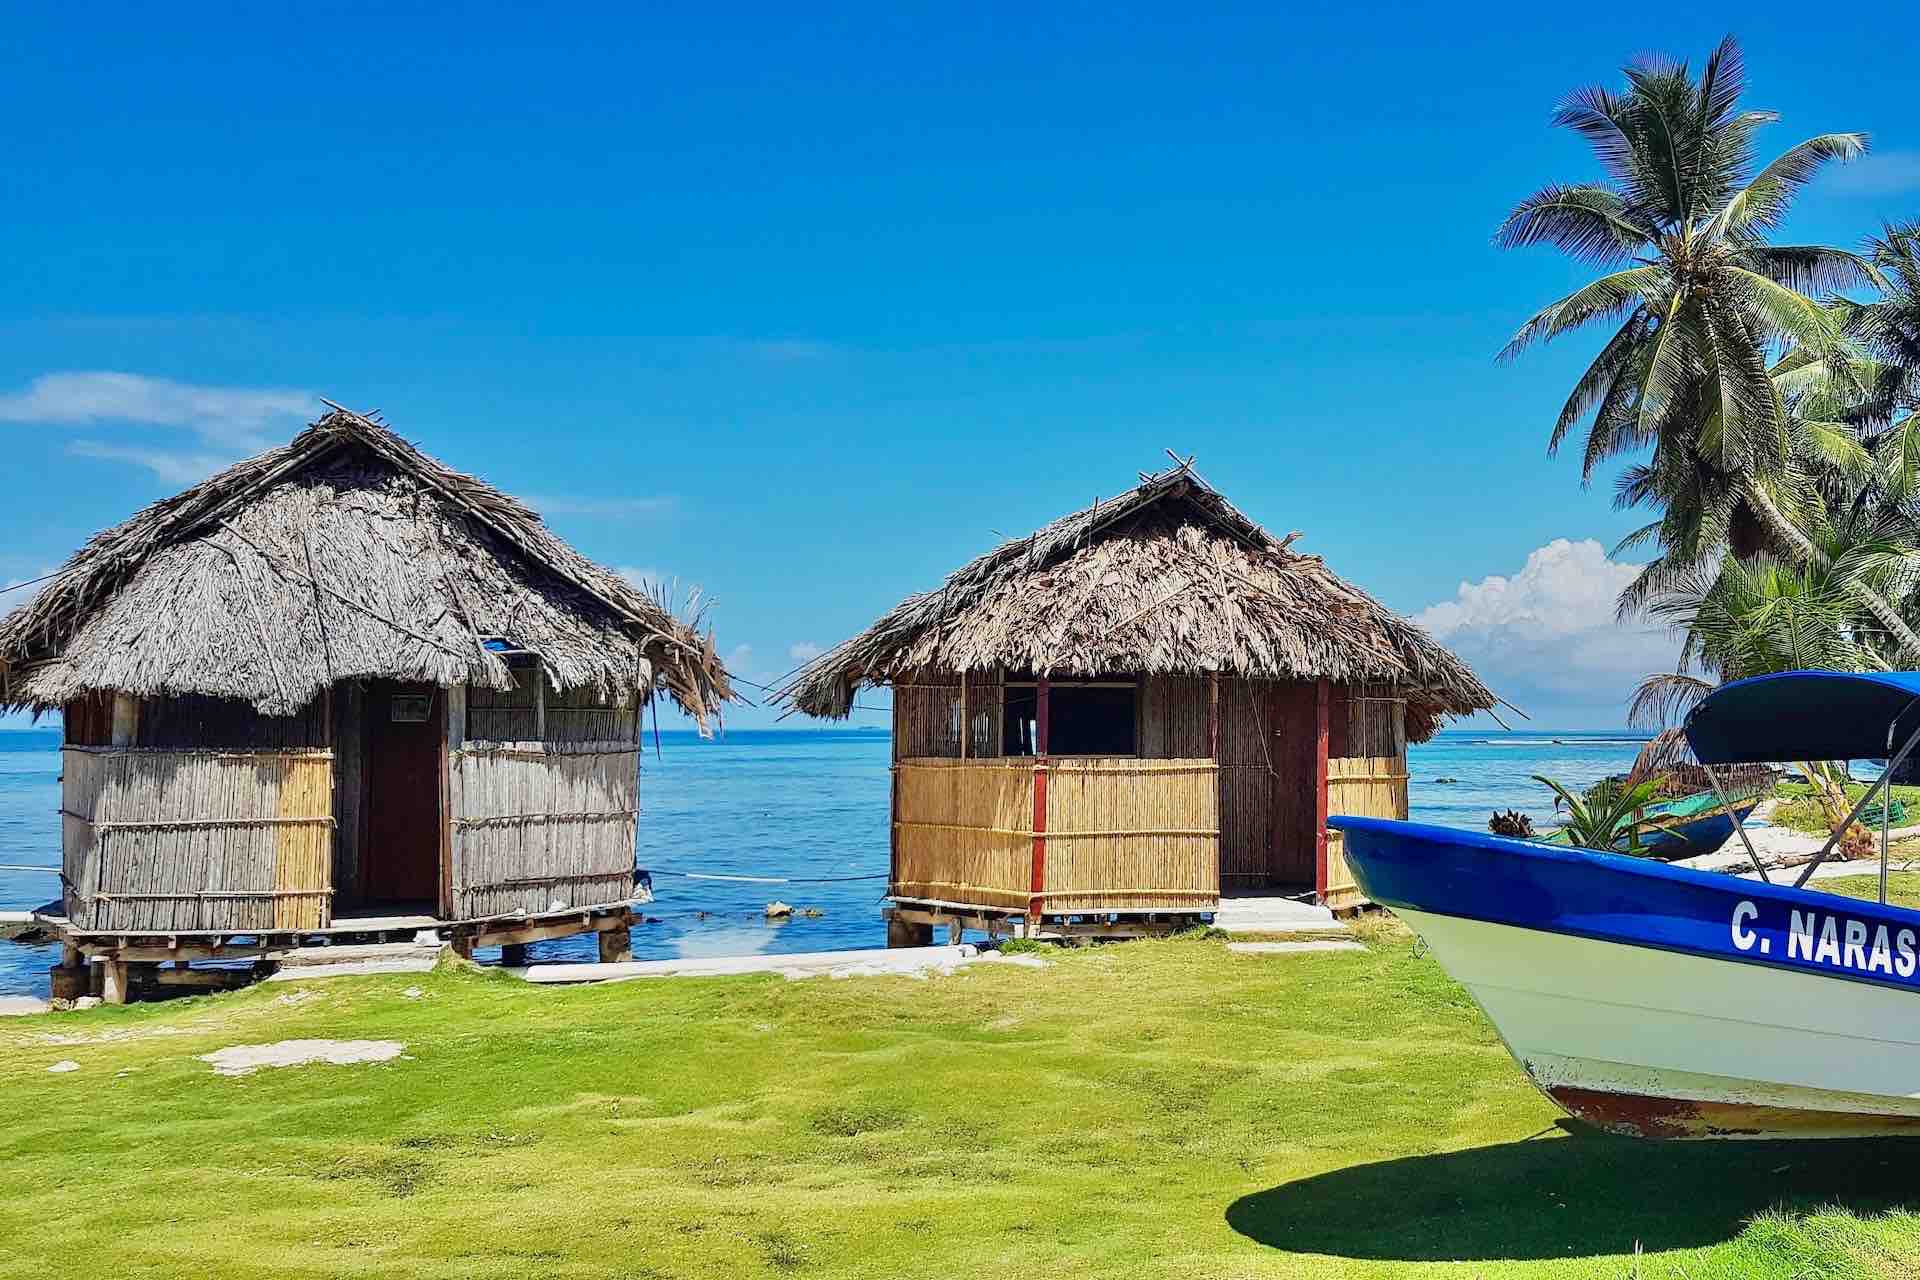 San Blas Isla Narasgandup island cabin thatch hut traditional